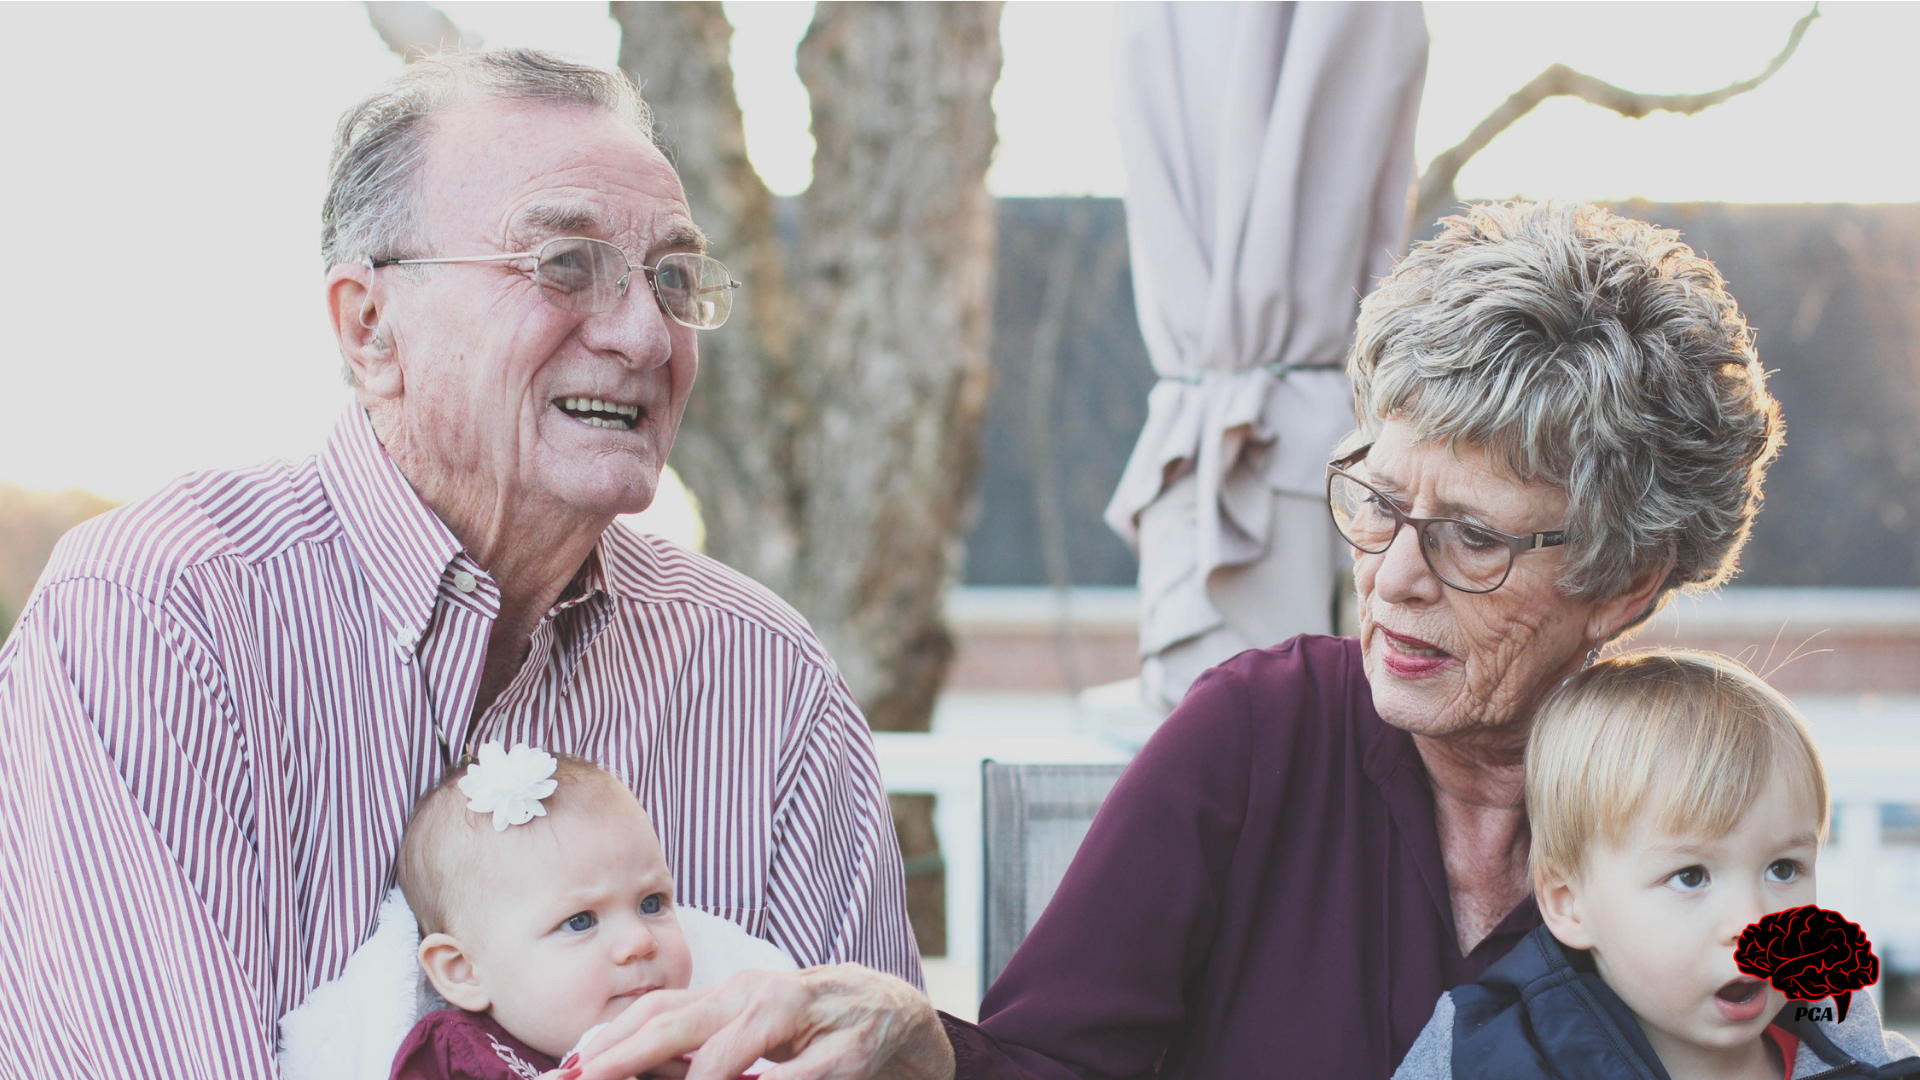 The new columns in Dementia care: Dementia Friendly Communities